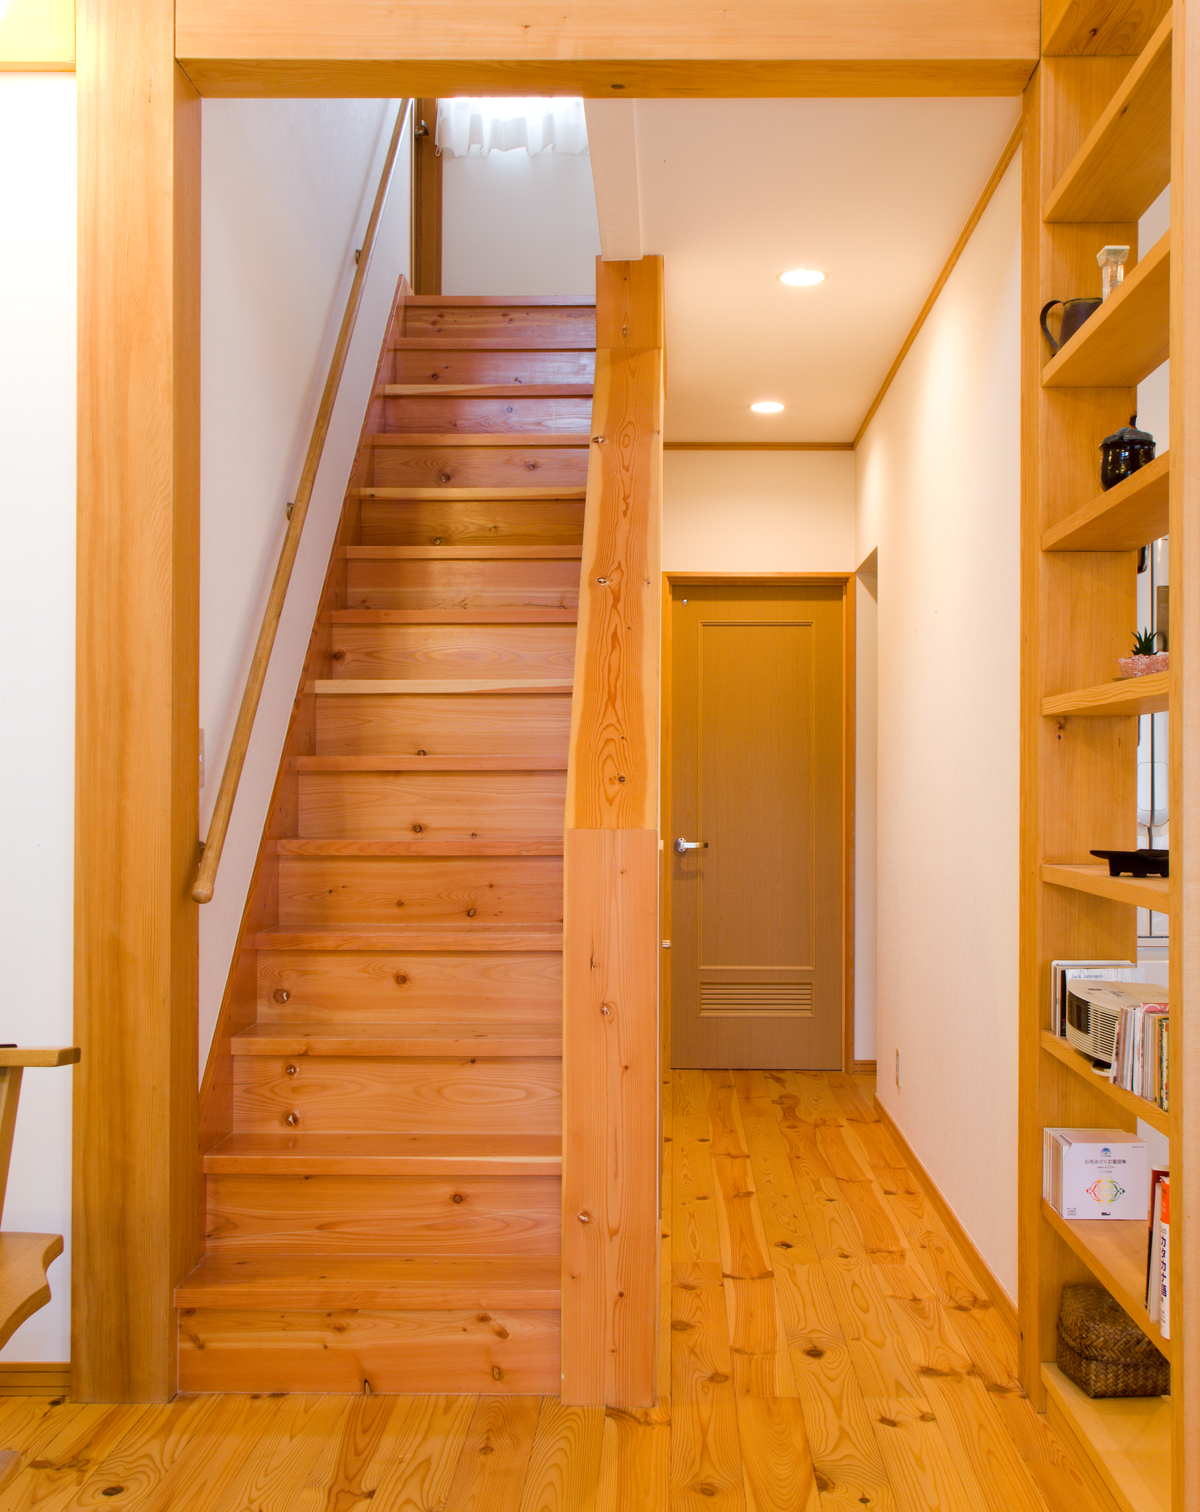 Interior daytime image of Suzuki House, showing extensive use of Ponderosa Pine (Pinus ponderosa) wood flooring, trim, stairway, and bookshelves